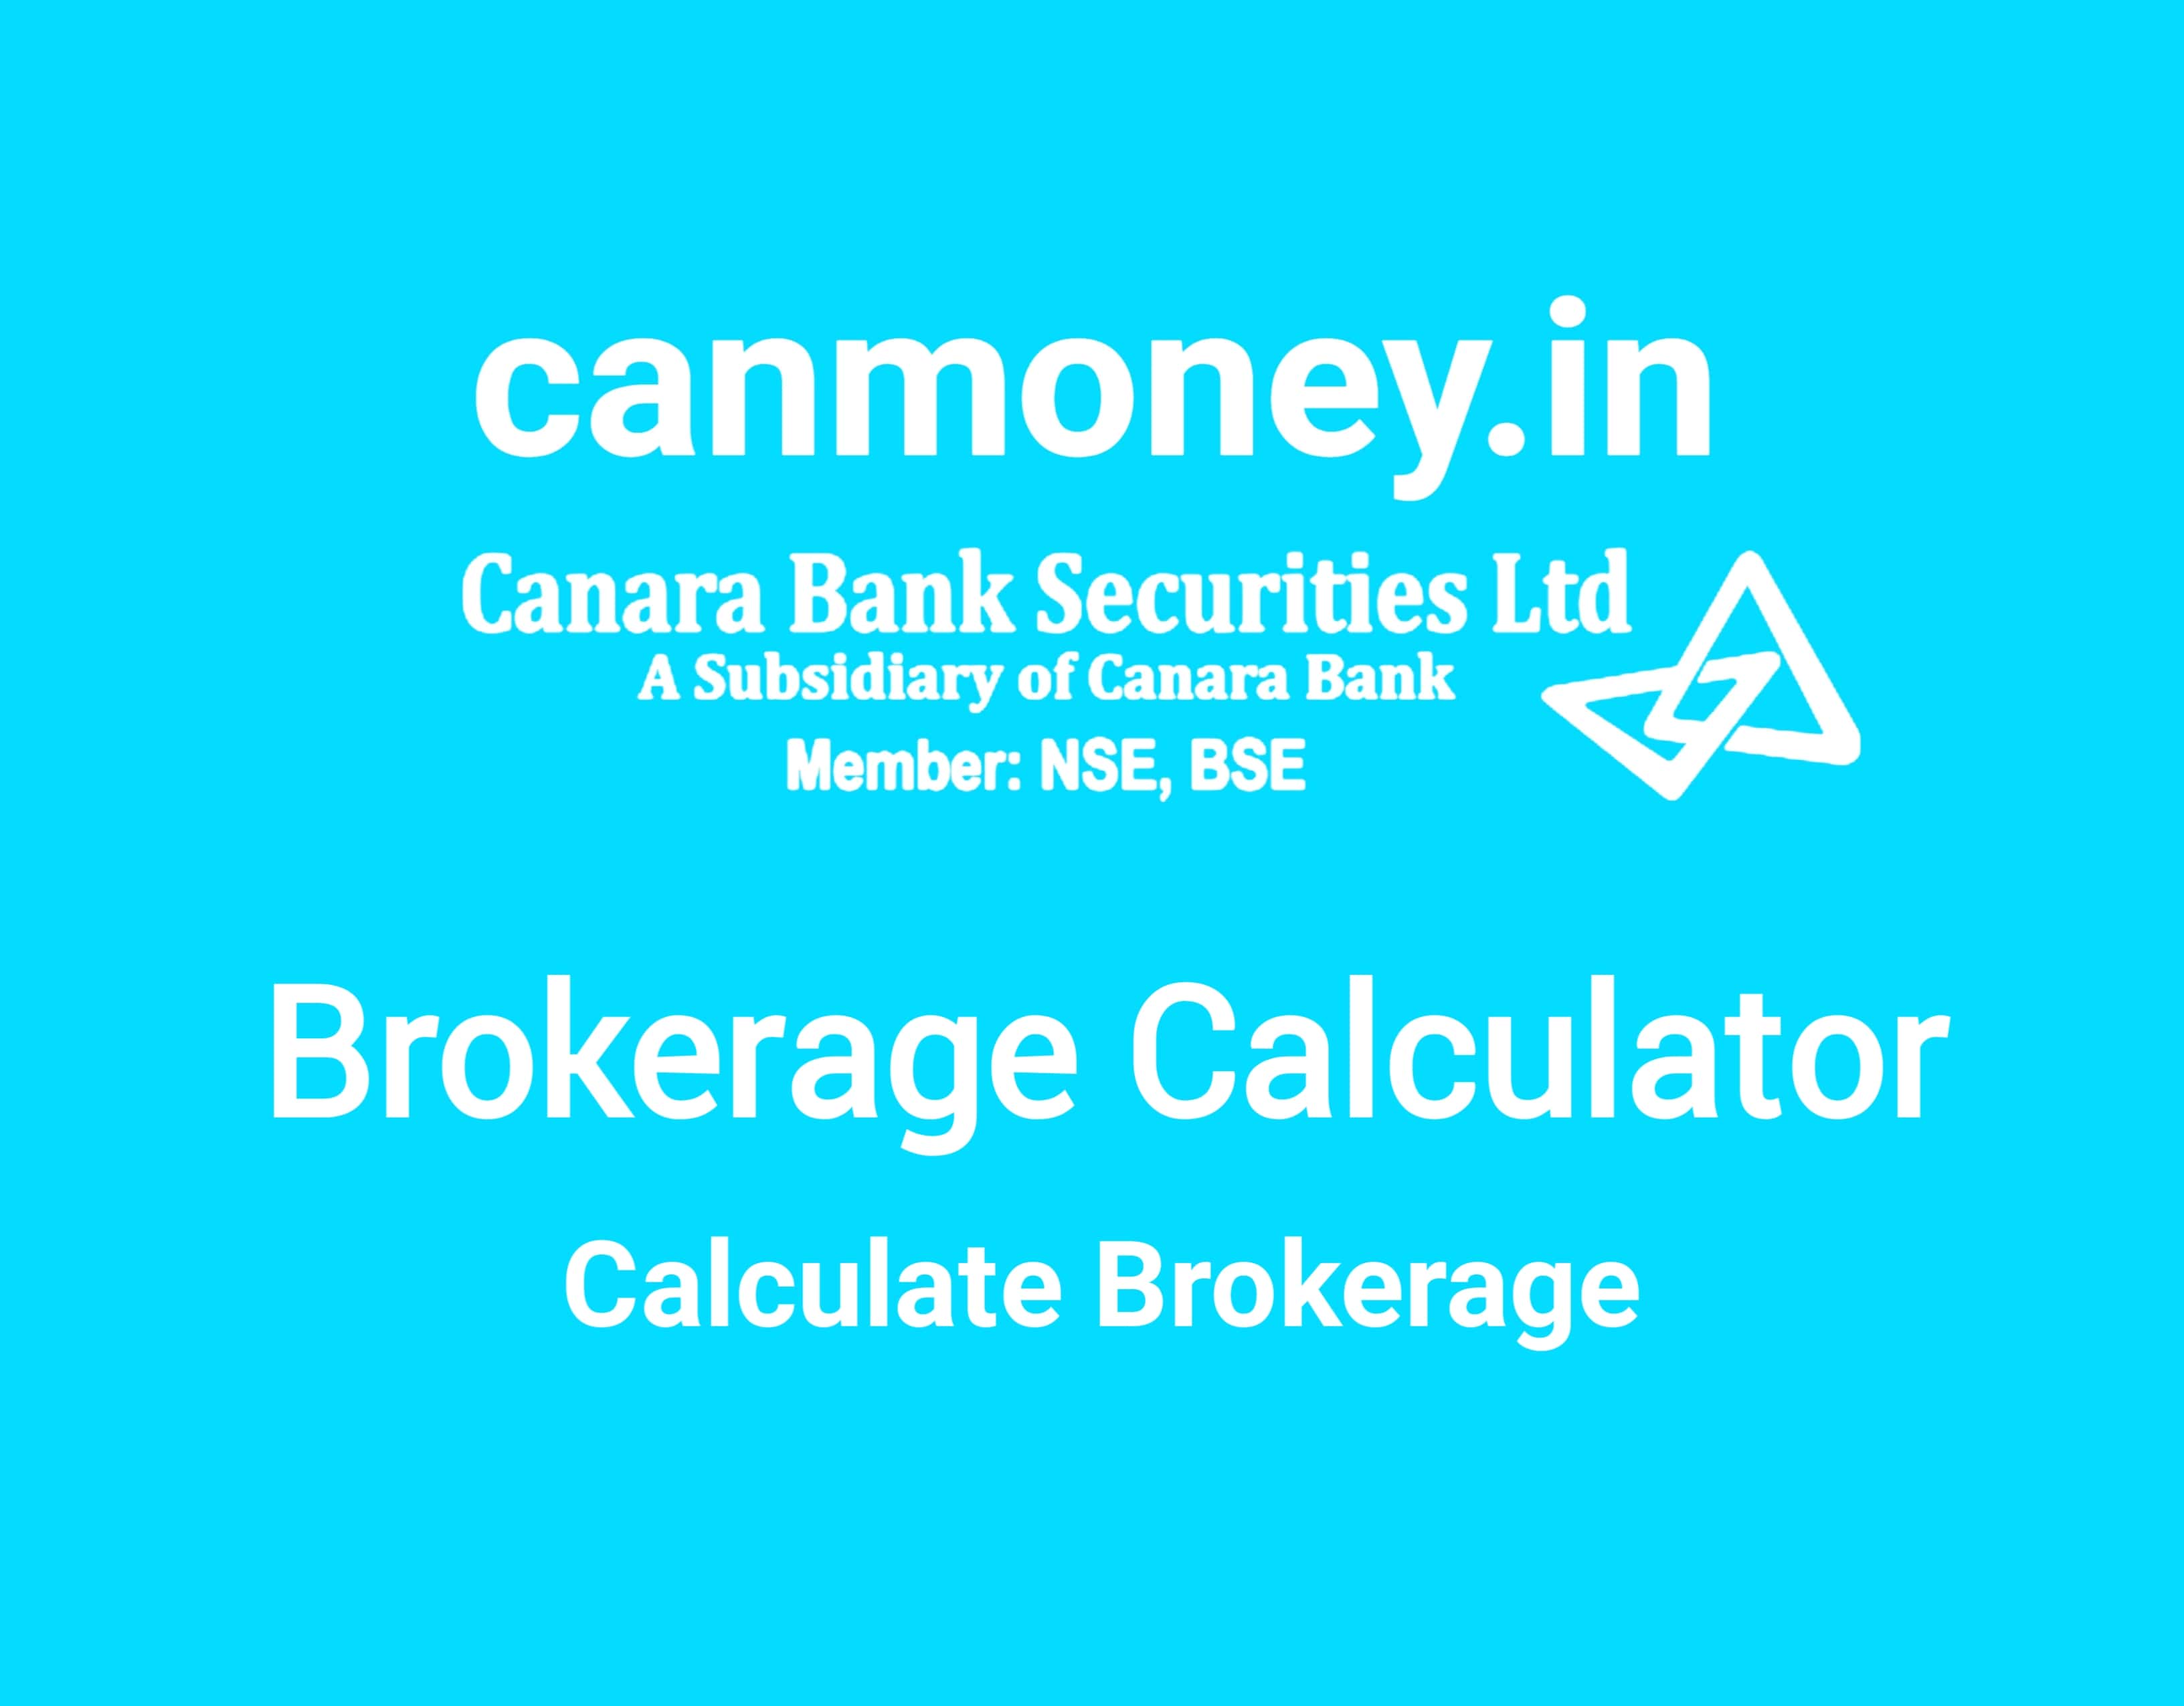 Canmoney Brokerage Calculator